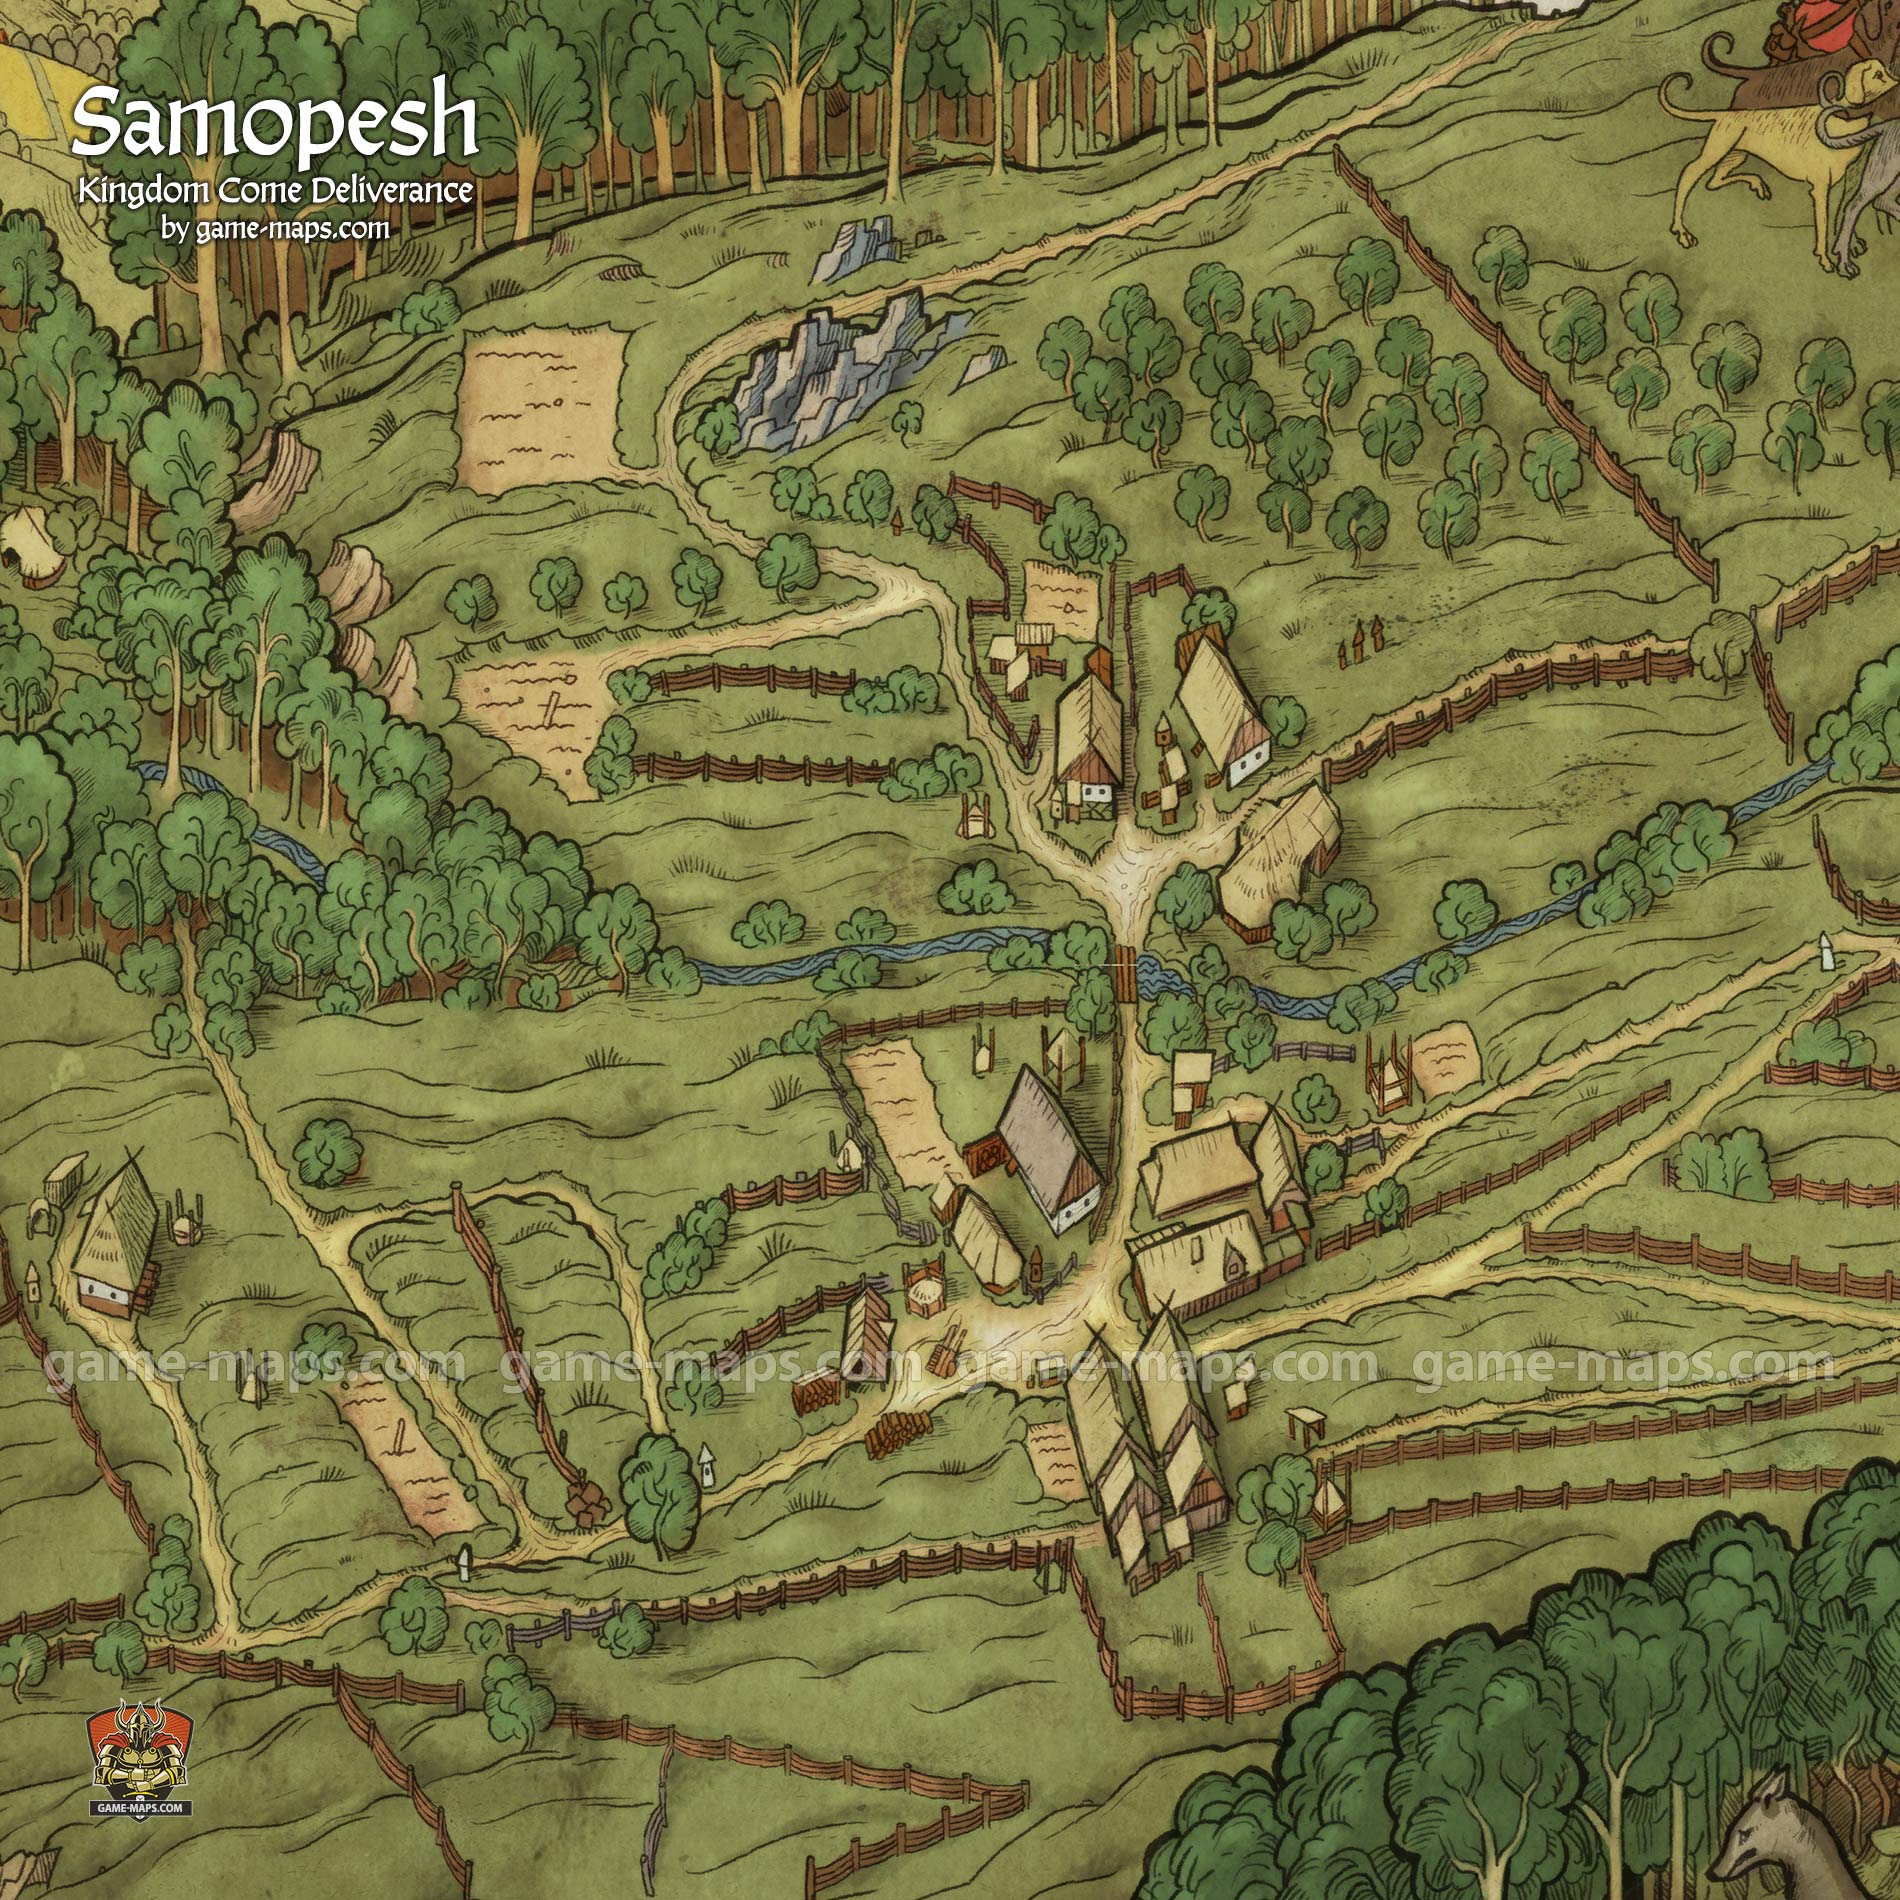 Samopesh Map for Kingdom Come Deliverance